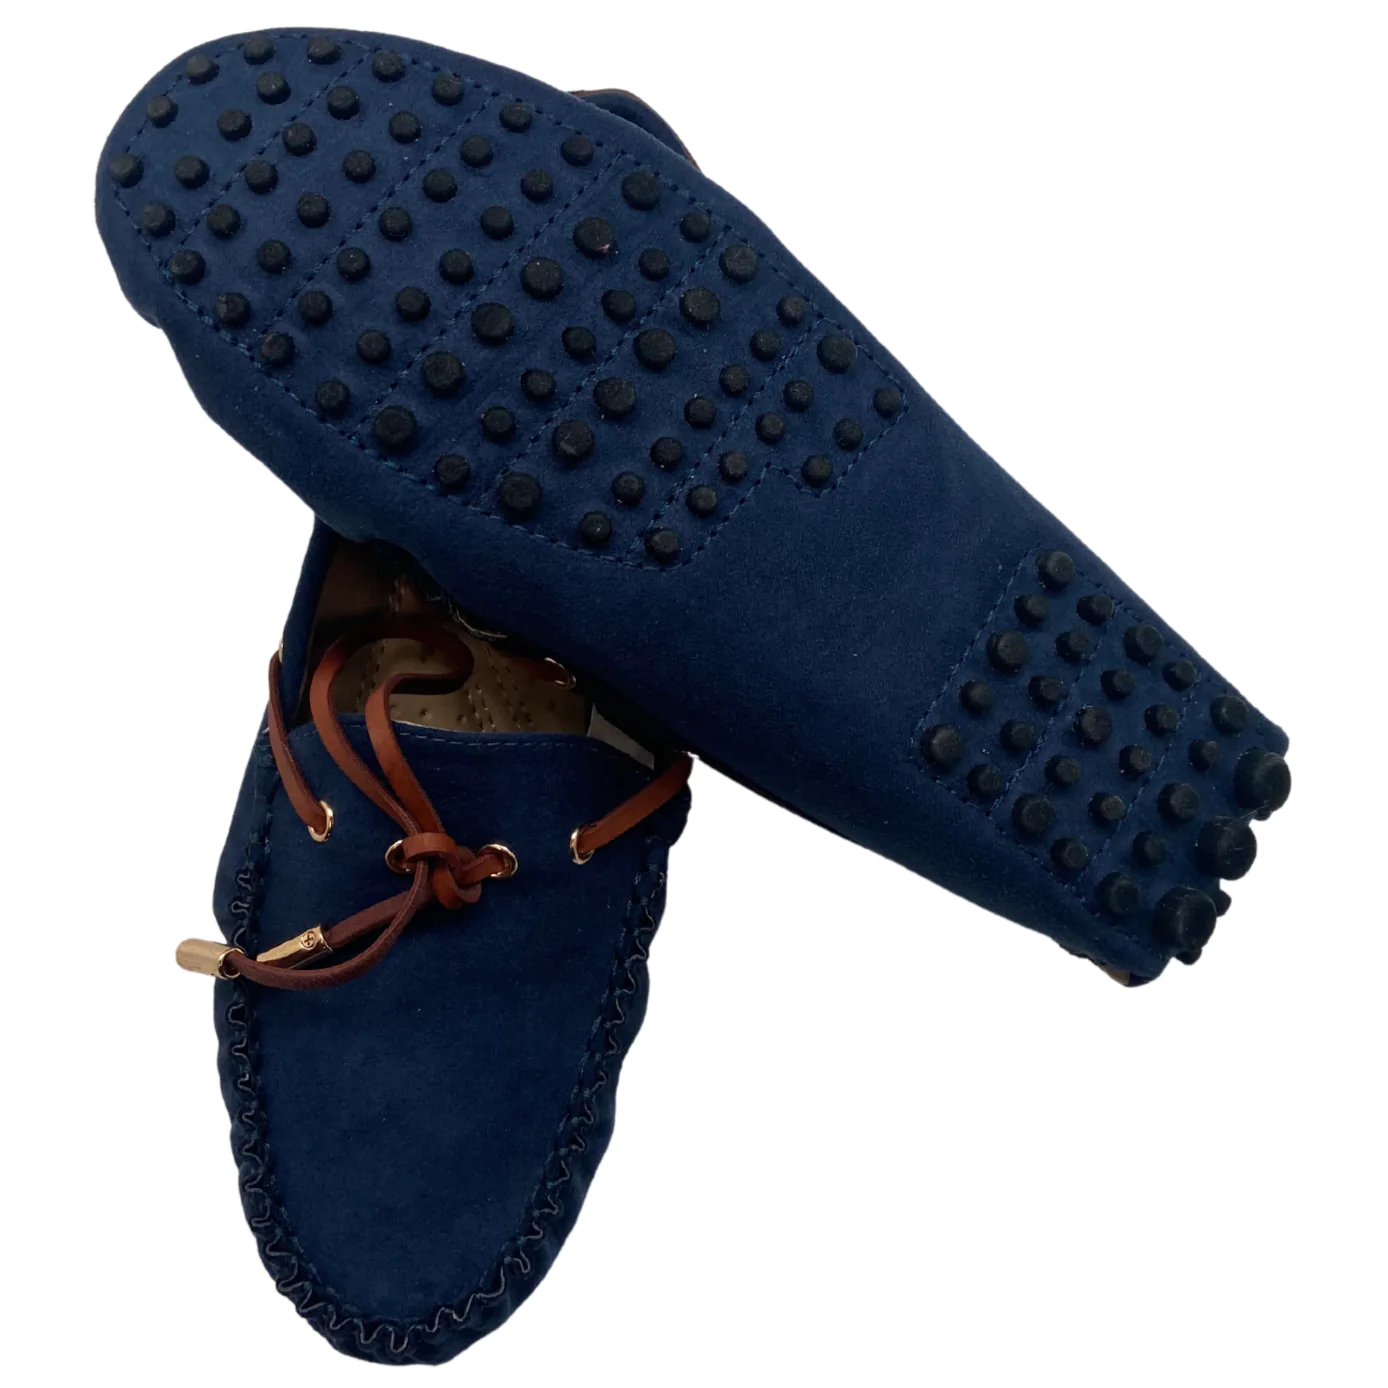 Justfab: Women's Shoe / Moccasin / Navy / Rosalinda / Size 6